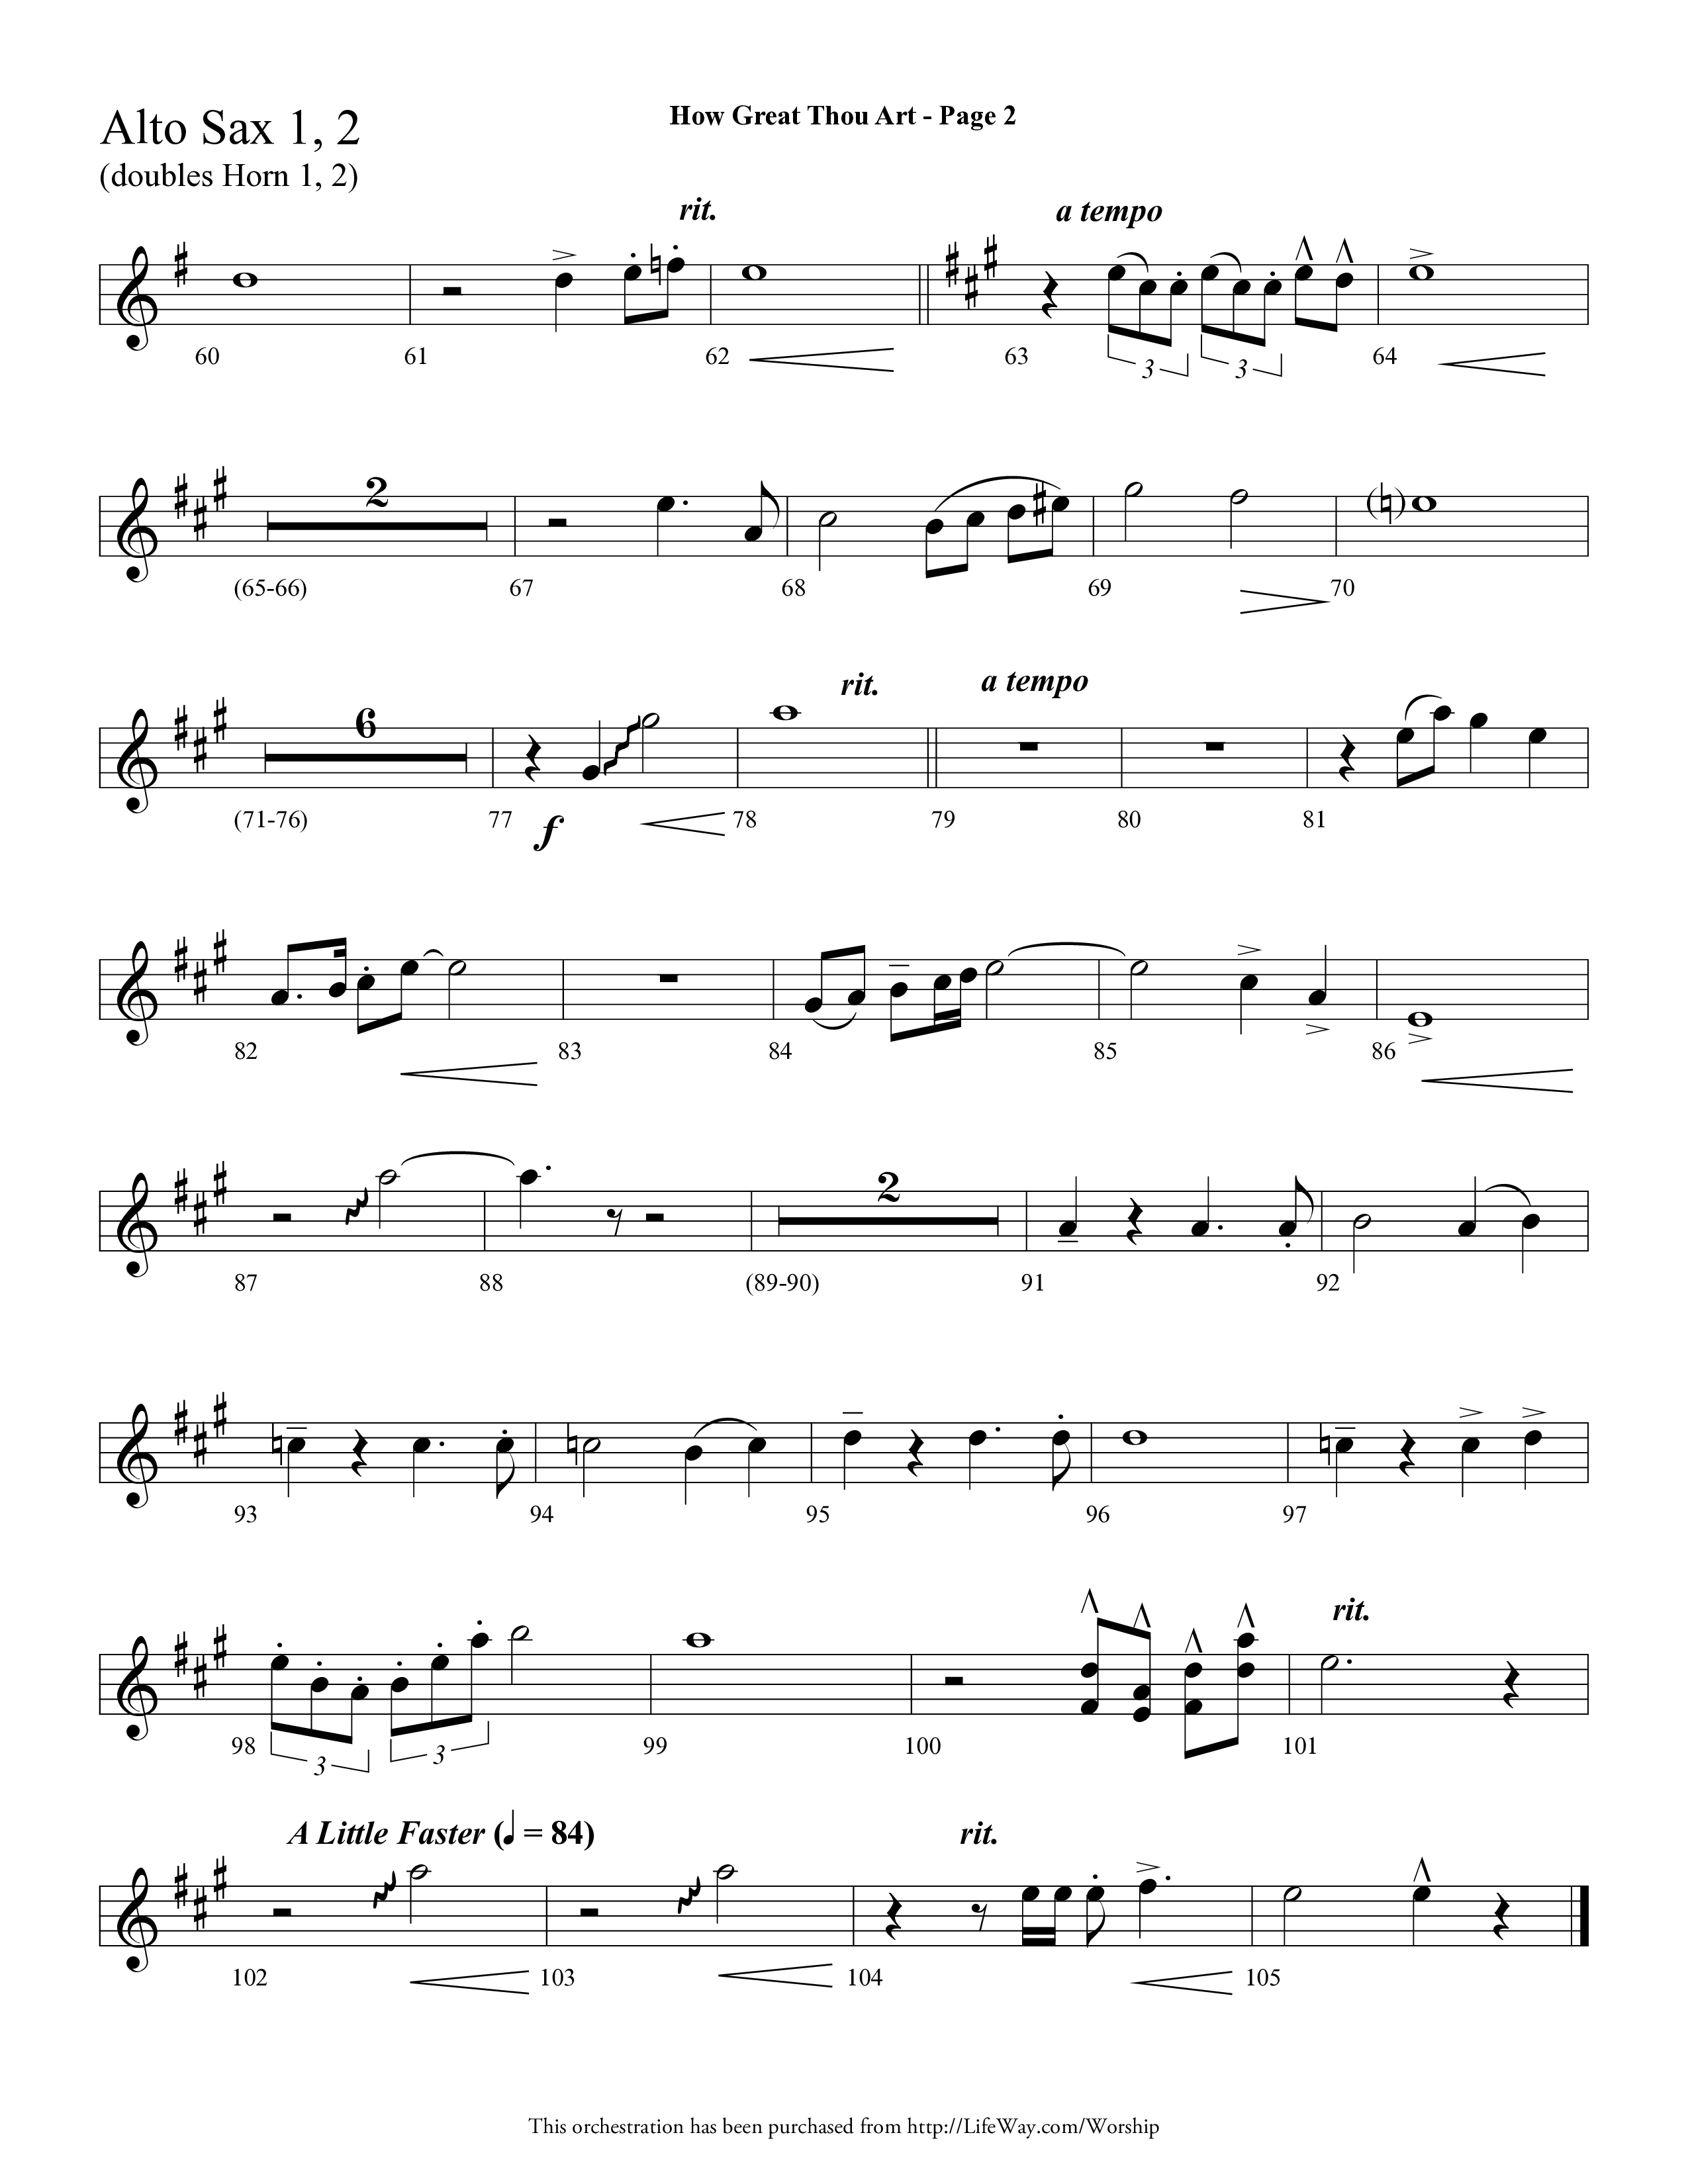 How Great Thou Art (Choral Anthem SATB) Alto Sax 1/2 (Lifeway Choral / Arr. Dave Williamson)